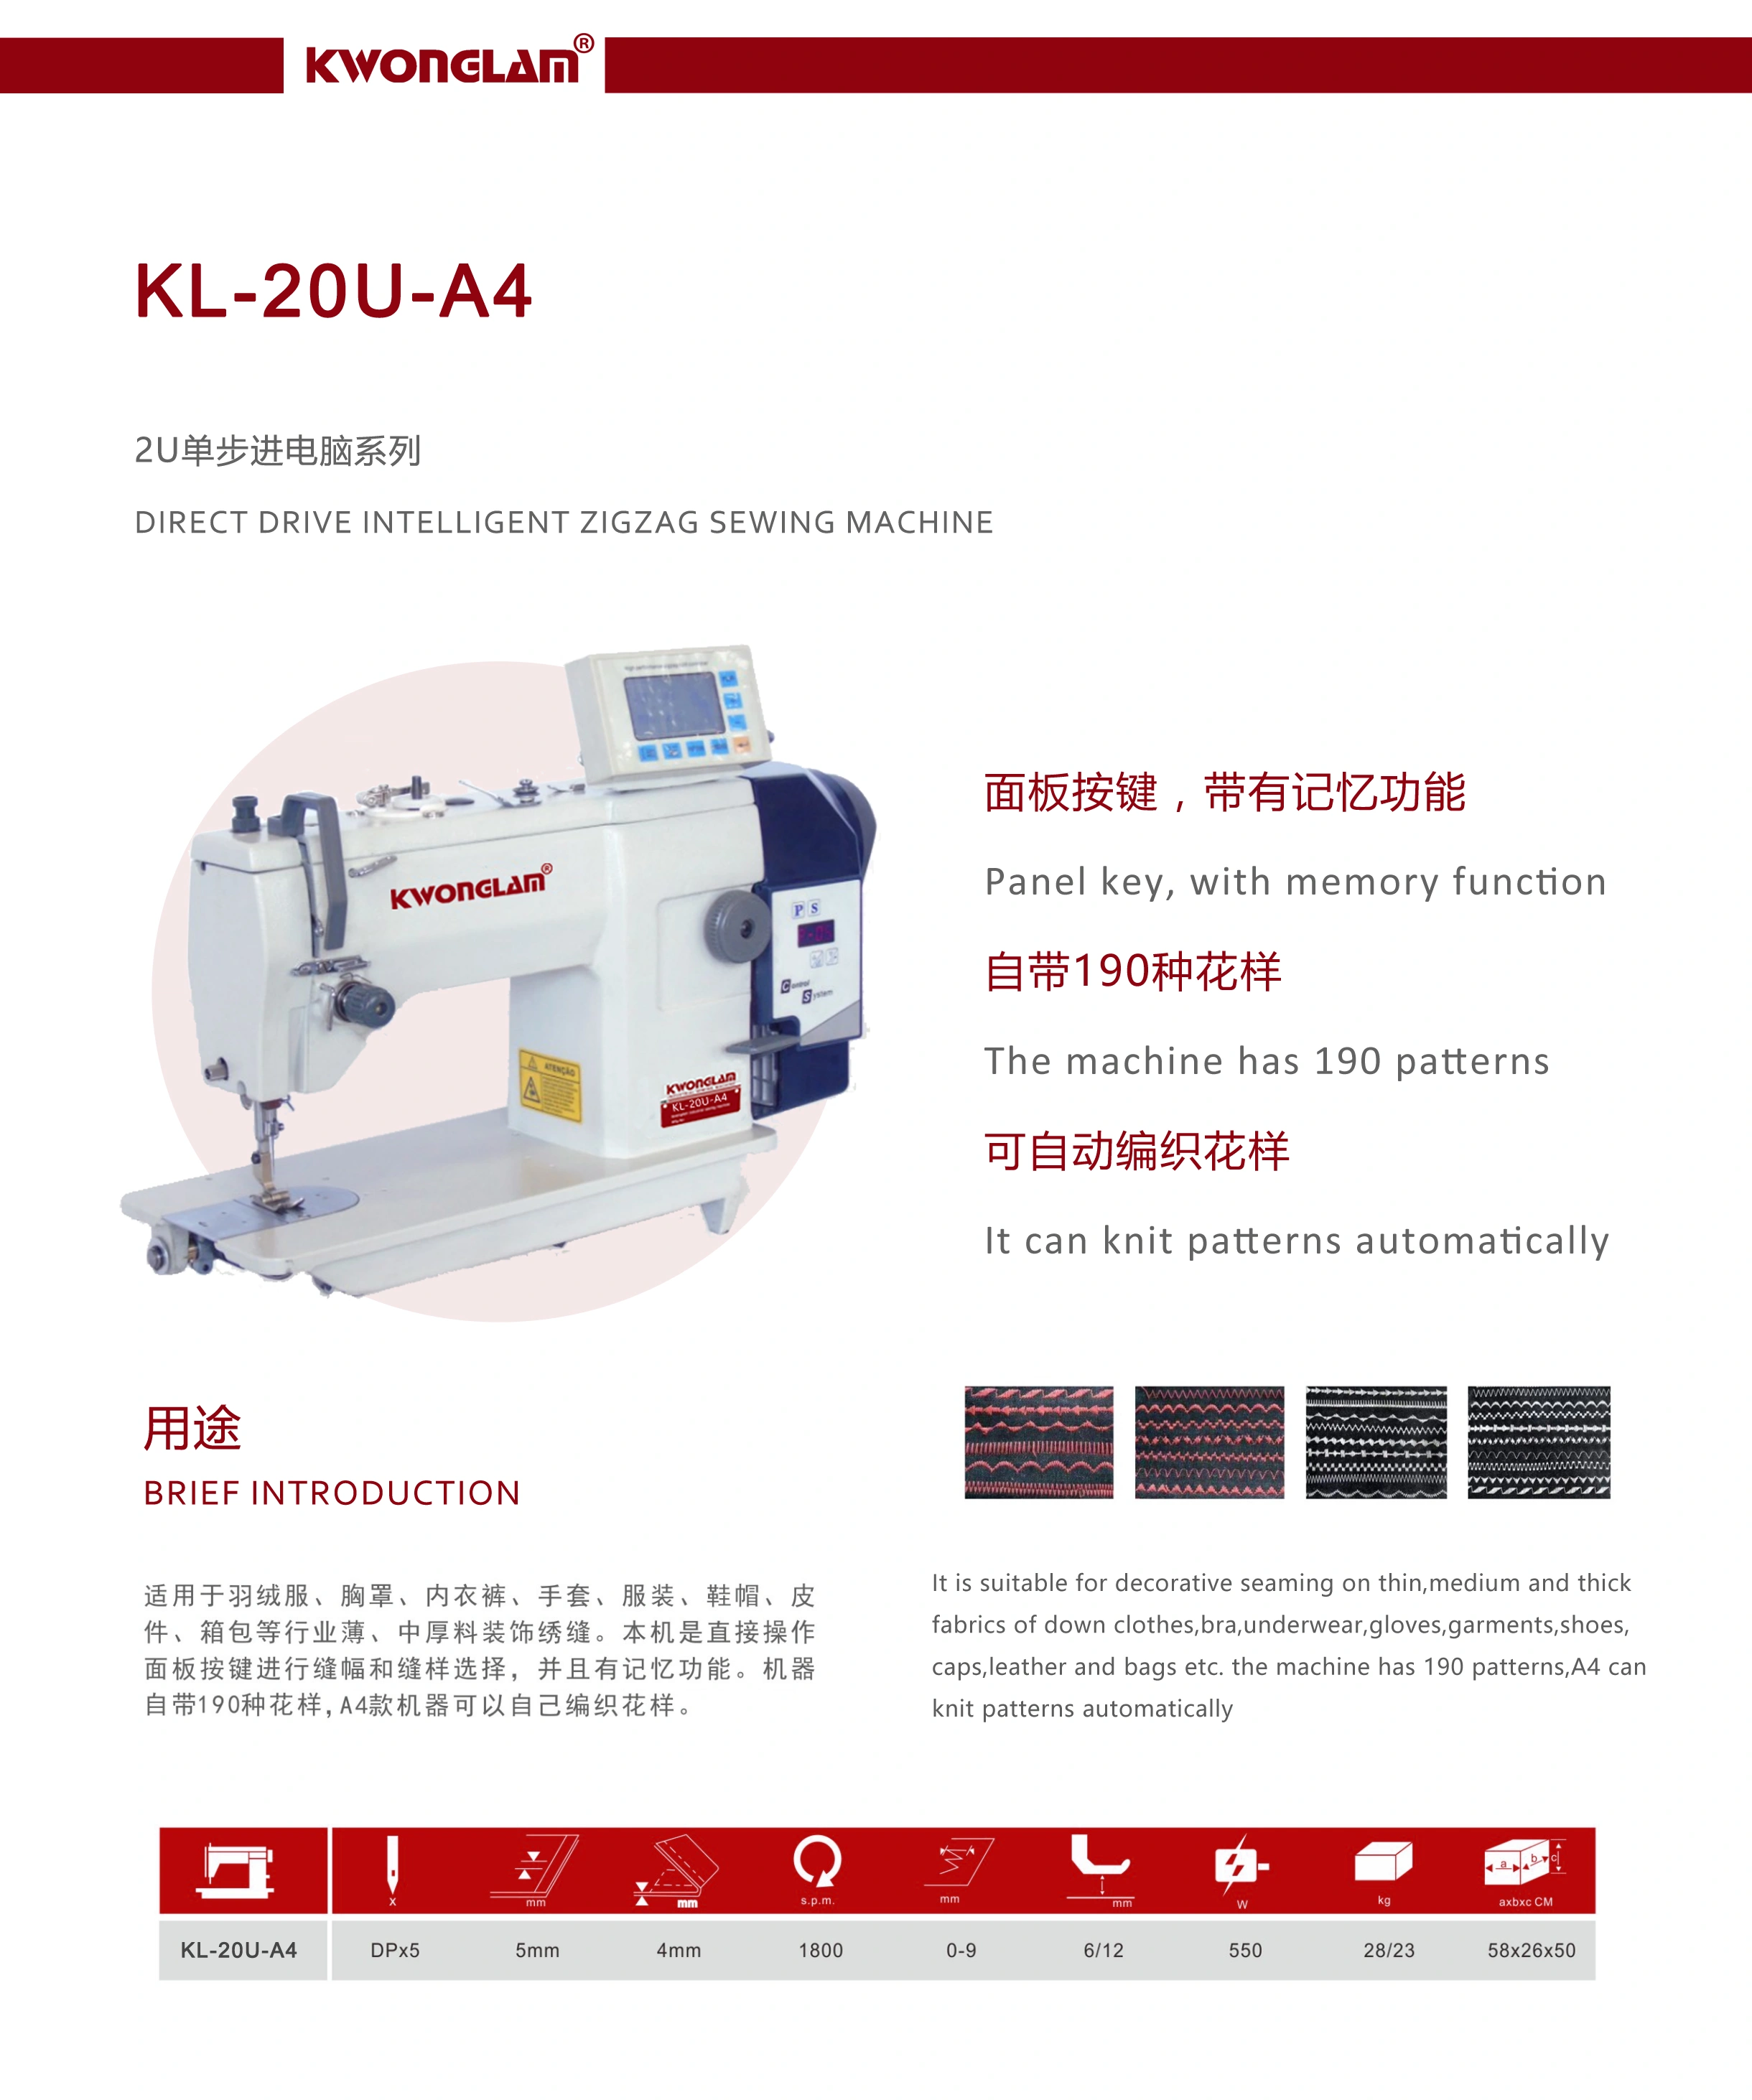 KL-20U-A4 Direct Drive Intelligent Pattern Zigzag Sewing Machine step motor